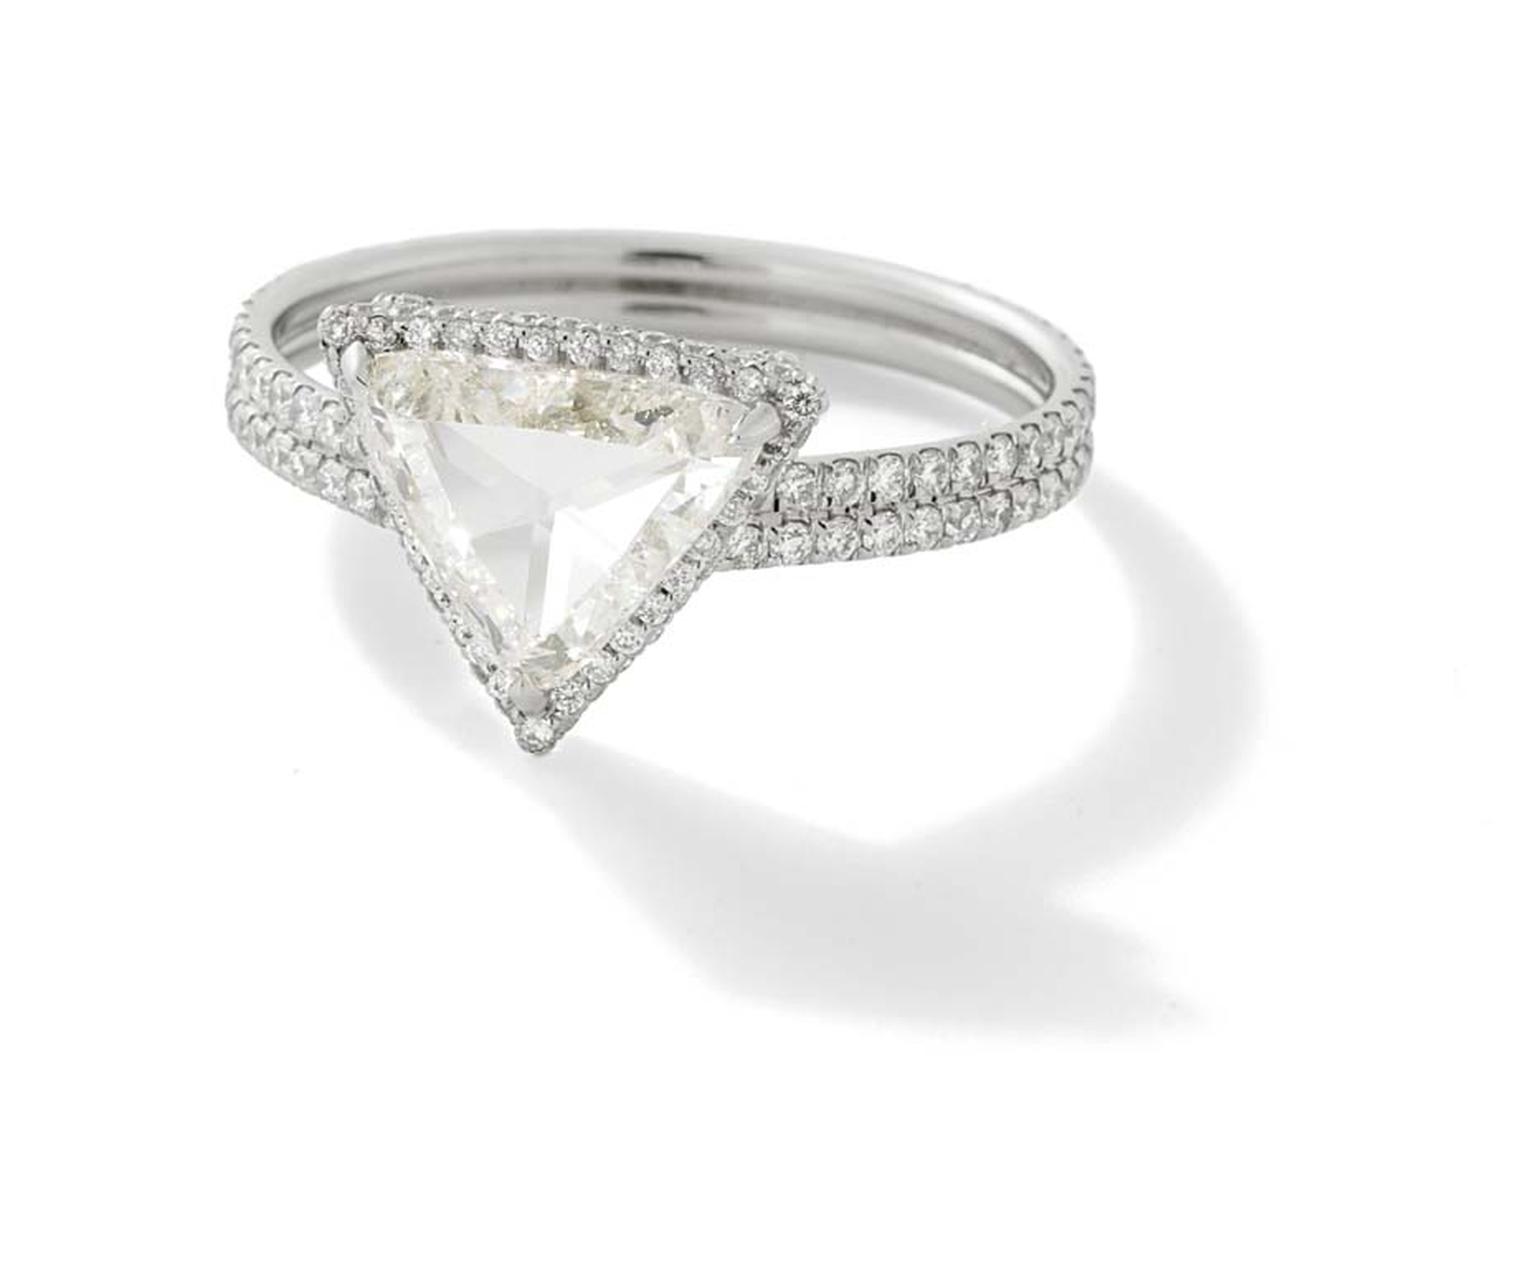 Monique Péan Mineraux collection white trillion rose cut diamond ring with white diamond pavé and recycled platinum ($43,520).